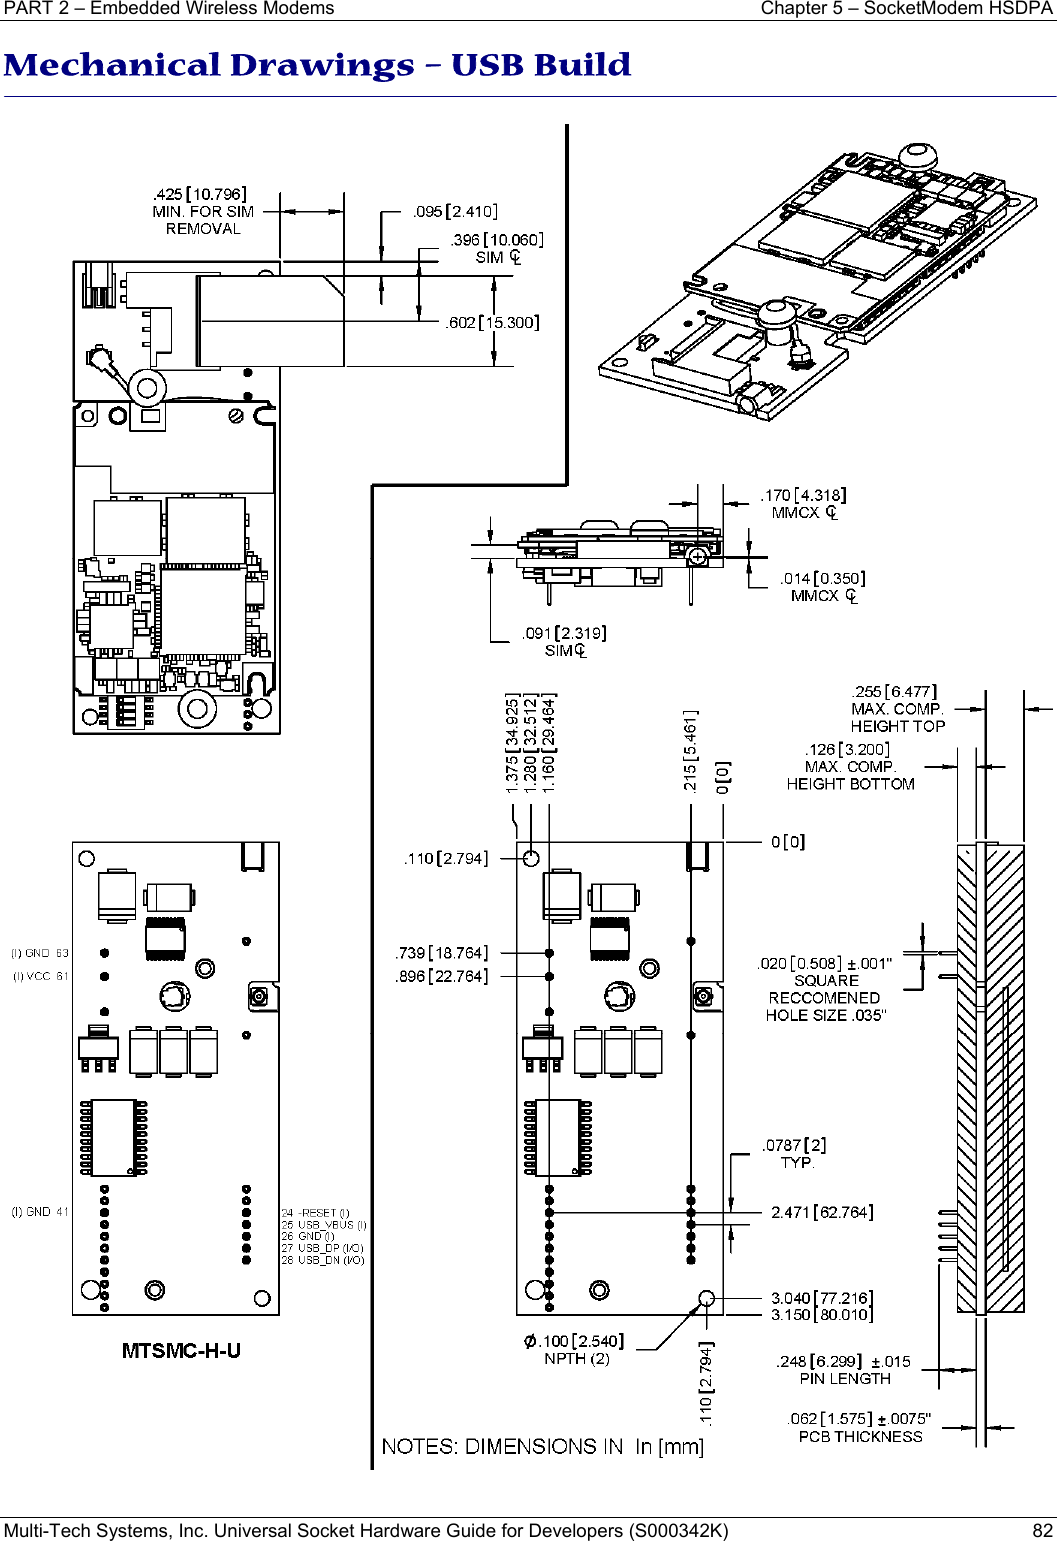 PART 2 – Embedded Wireless Modems  Chapter 5 – SocketModem HSDPA Multi-Tech Systems, Inc. Universal Socket Hardware Guide for Developers (S000342K)  82  Mechanical Drawings – USB Build  